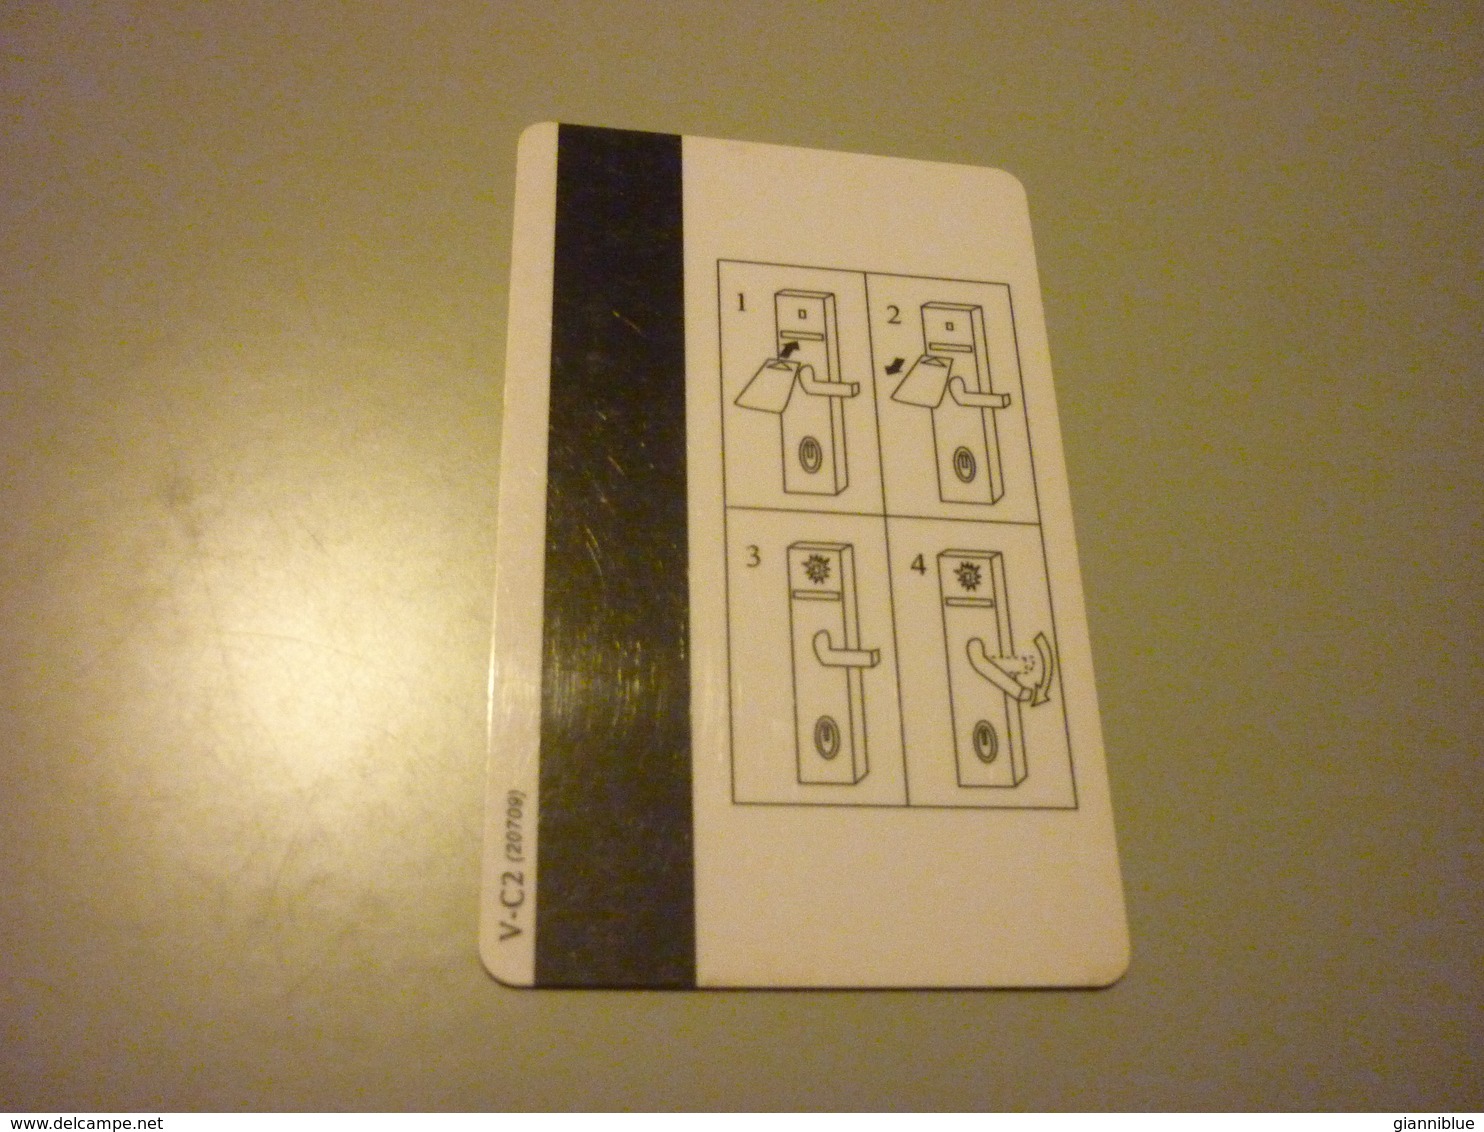 China Shangri-La Hotel Room Key Card - Cartes D'hotel